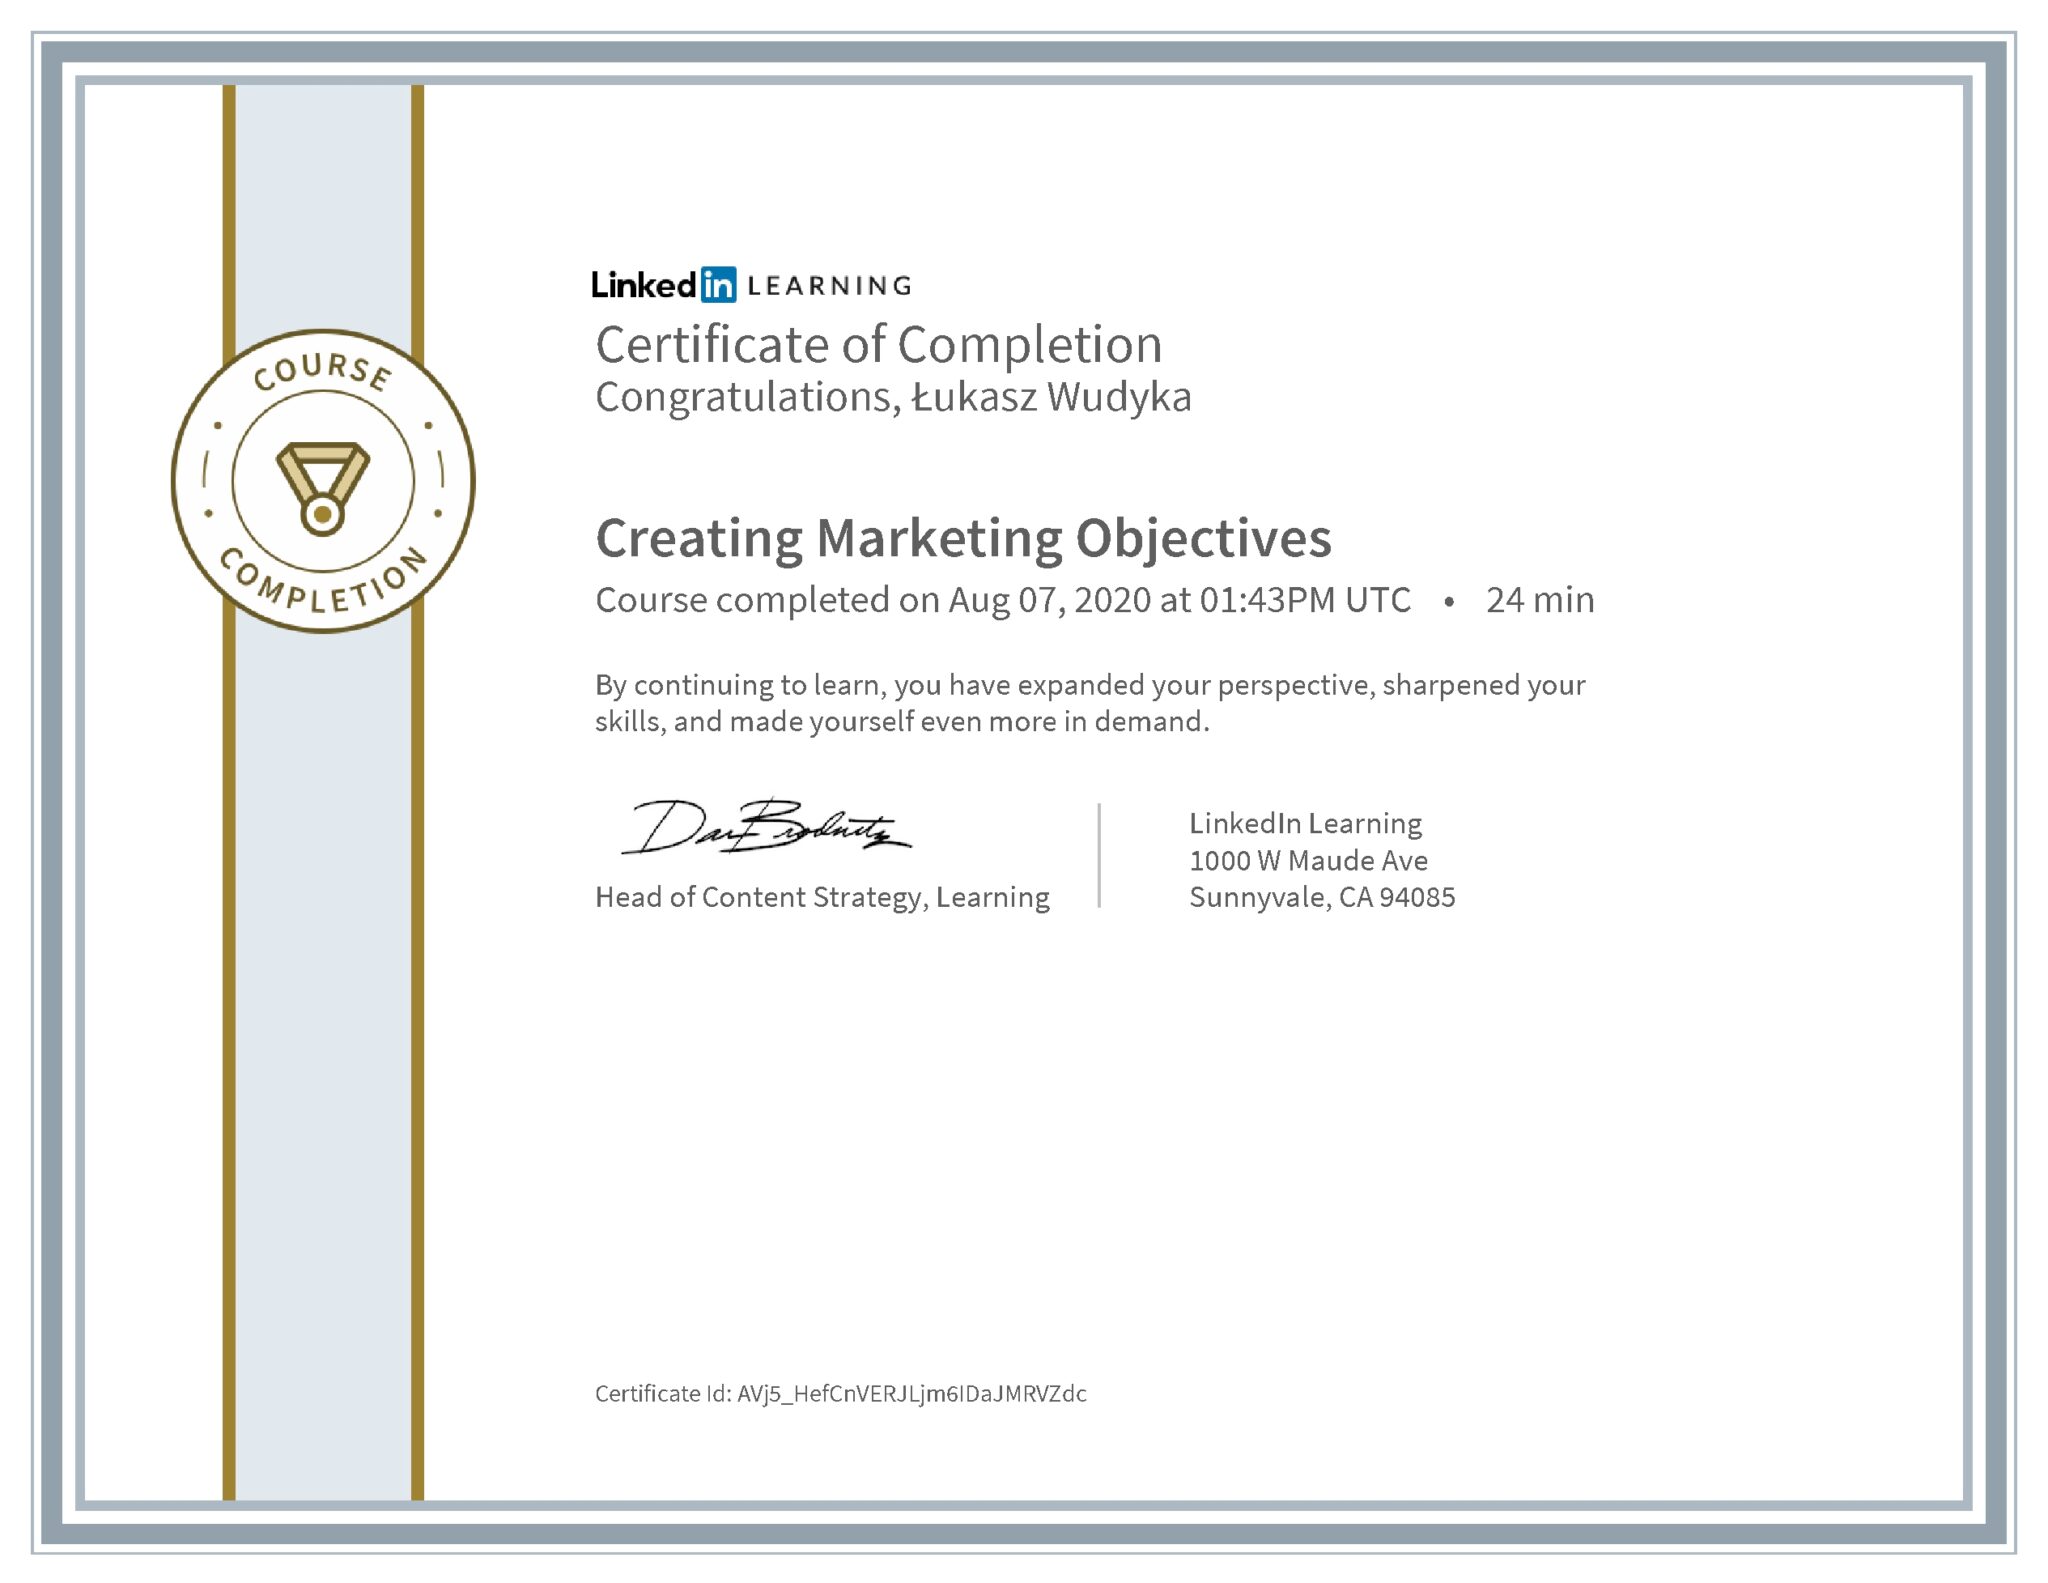 Łukasz Wudyka certyfikat LinkedIn Creating Marketing Objectives